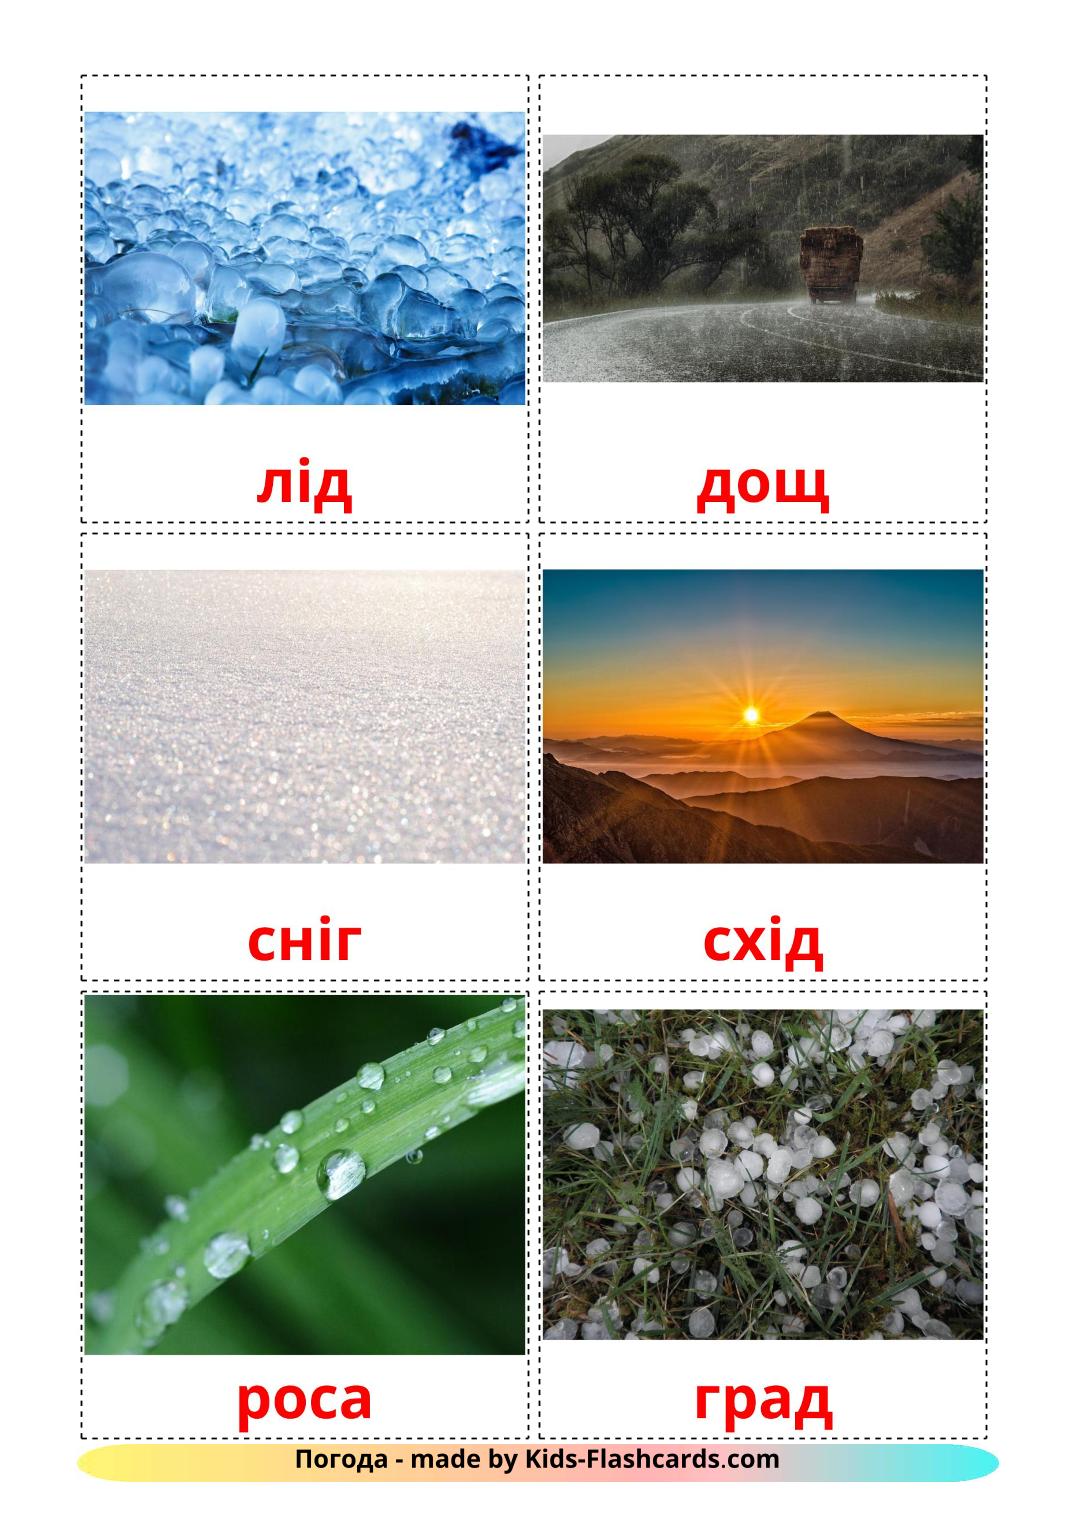 Tempo atmosferico - 31 flashcards ucraino stampabili gratuitamente